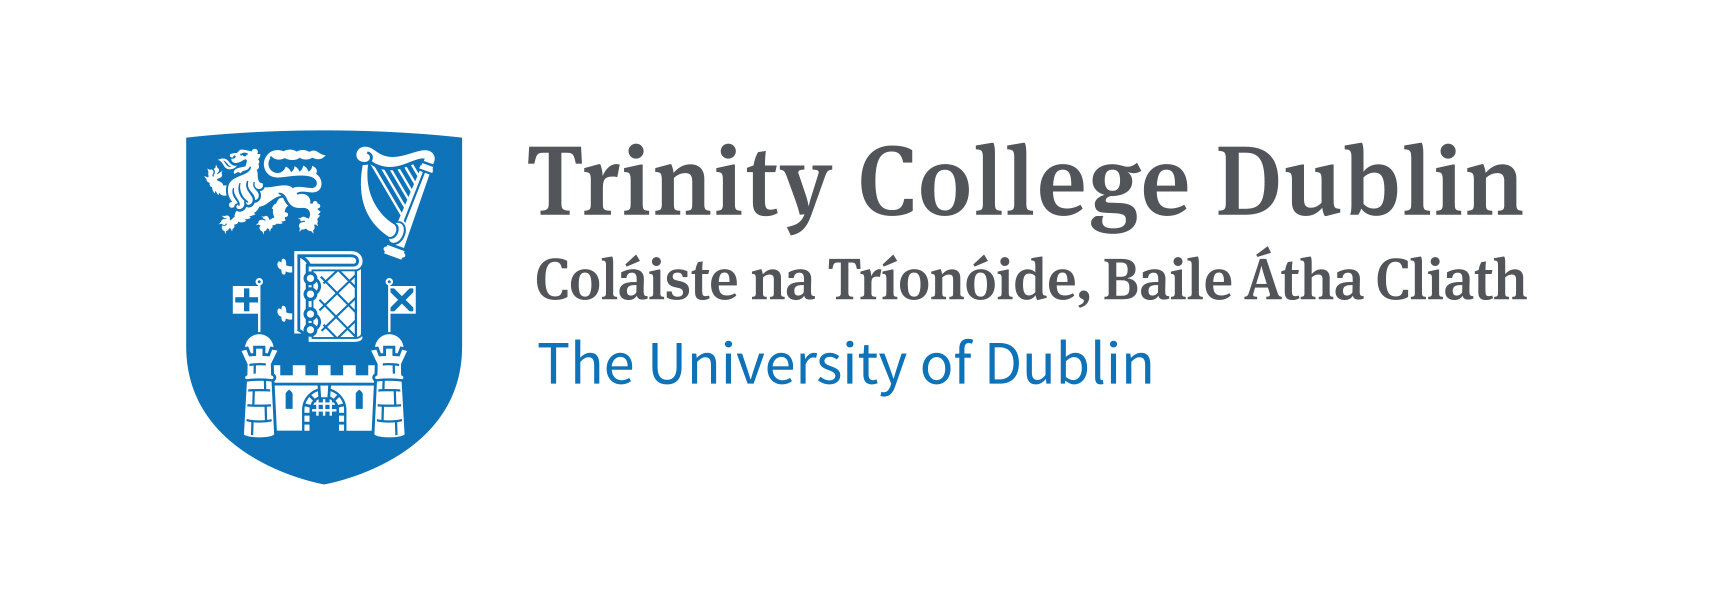 Yana Immis Study Abroad Study In Ireland Trinity College Dublin University of Dublin.jpg